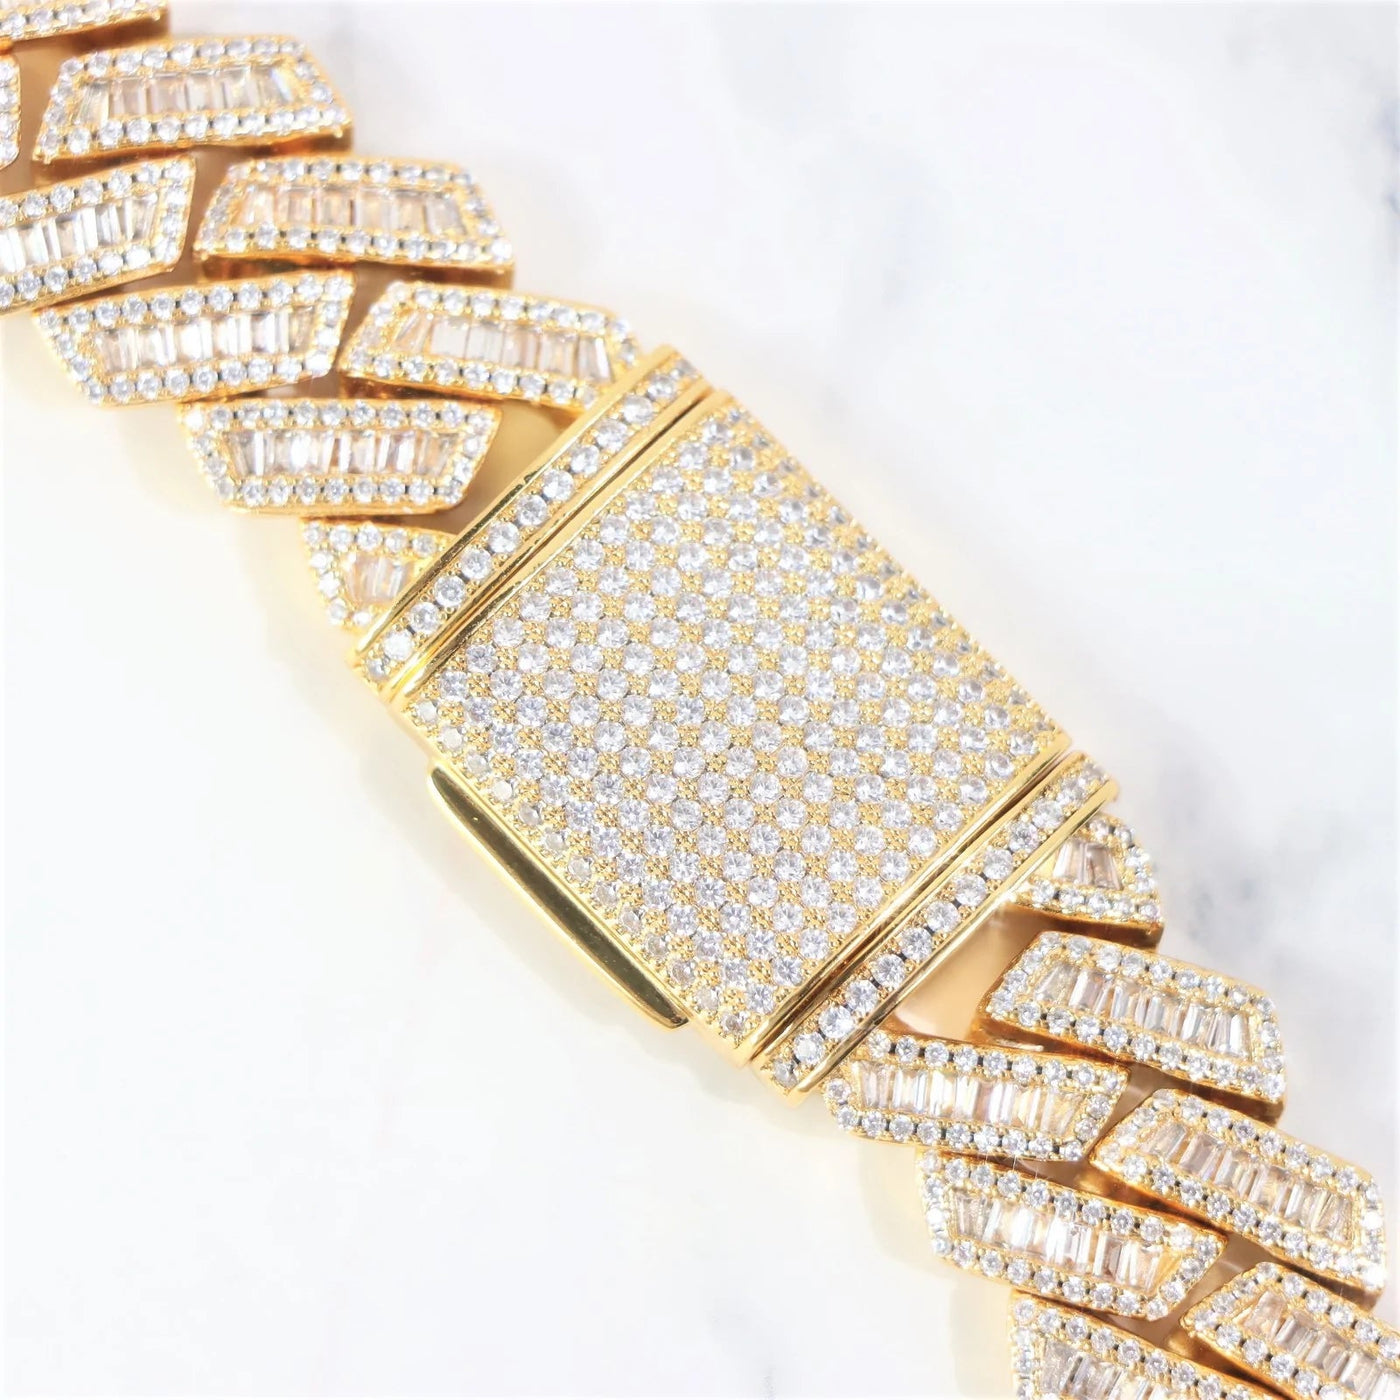 The Proud Moment® - 20mm Baguette Cut Moissanite Diamond Prong Cuban Link Chain in 14K Gold Necklaces 